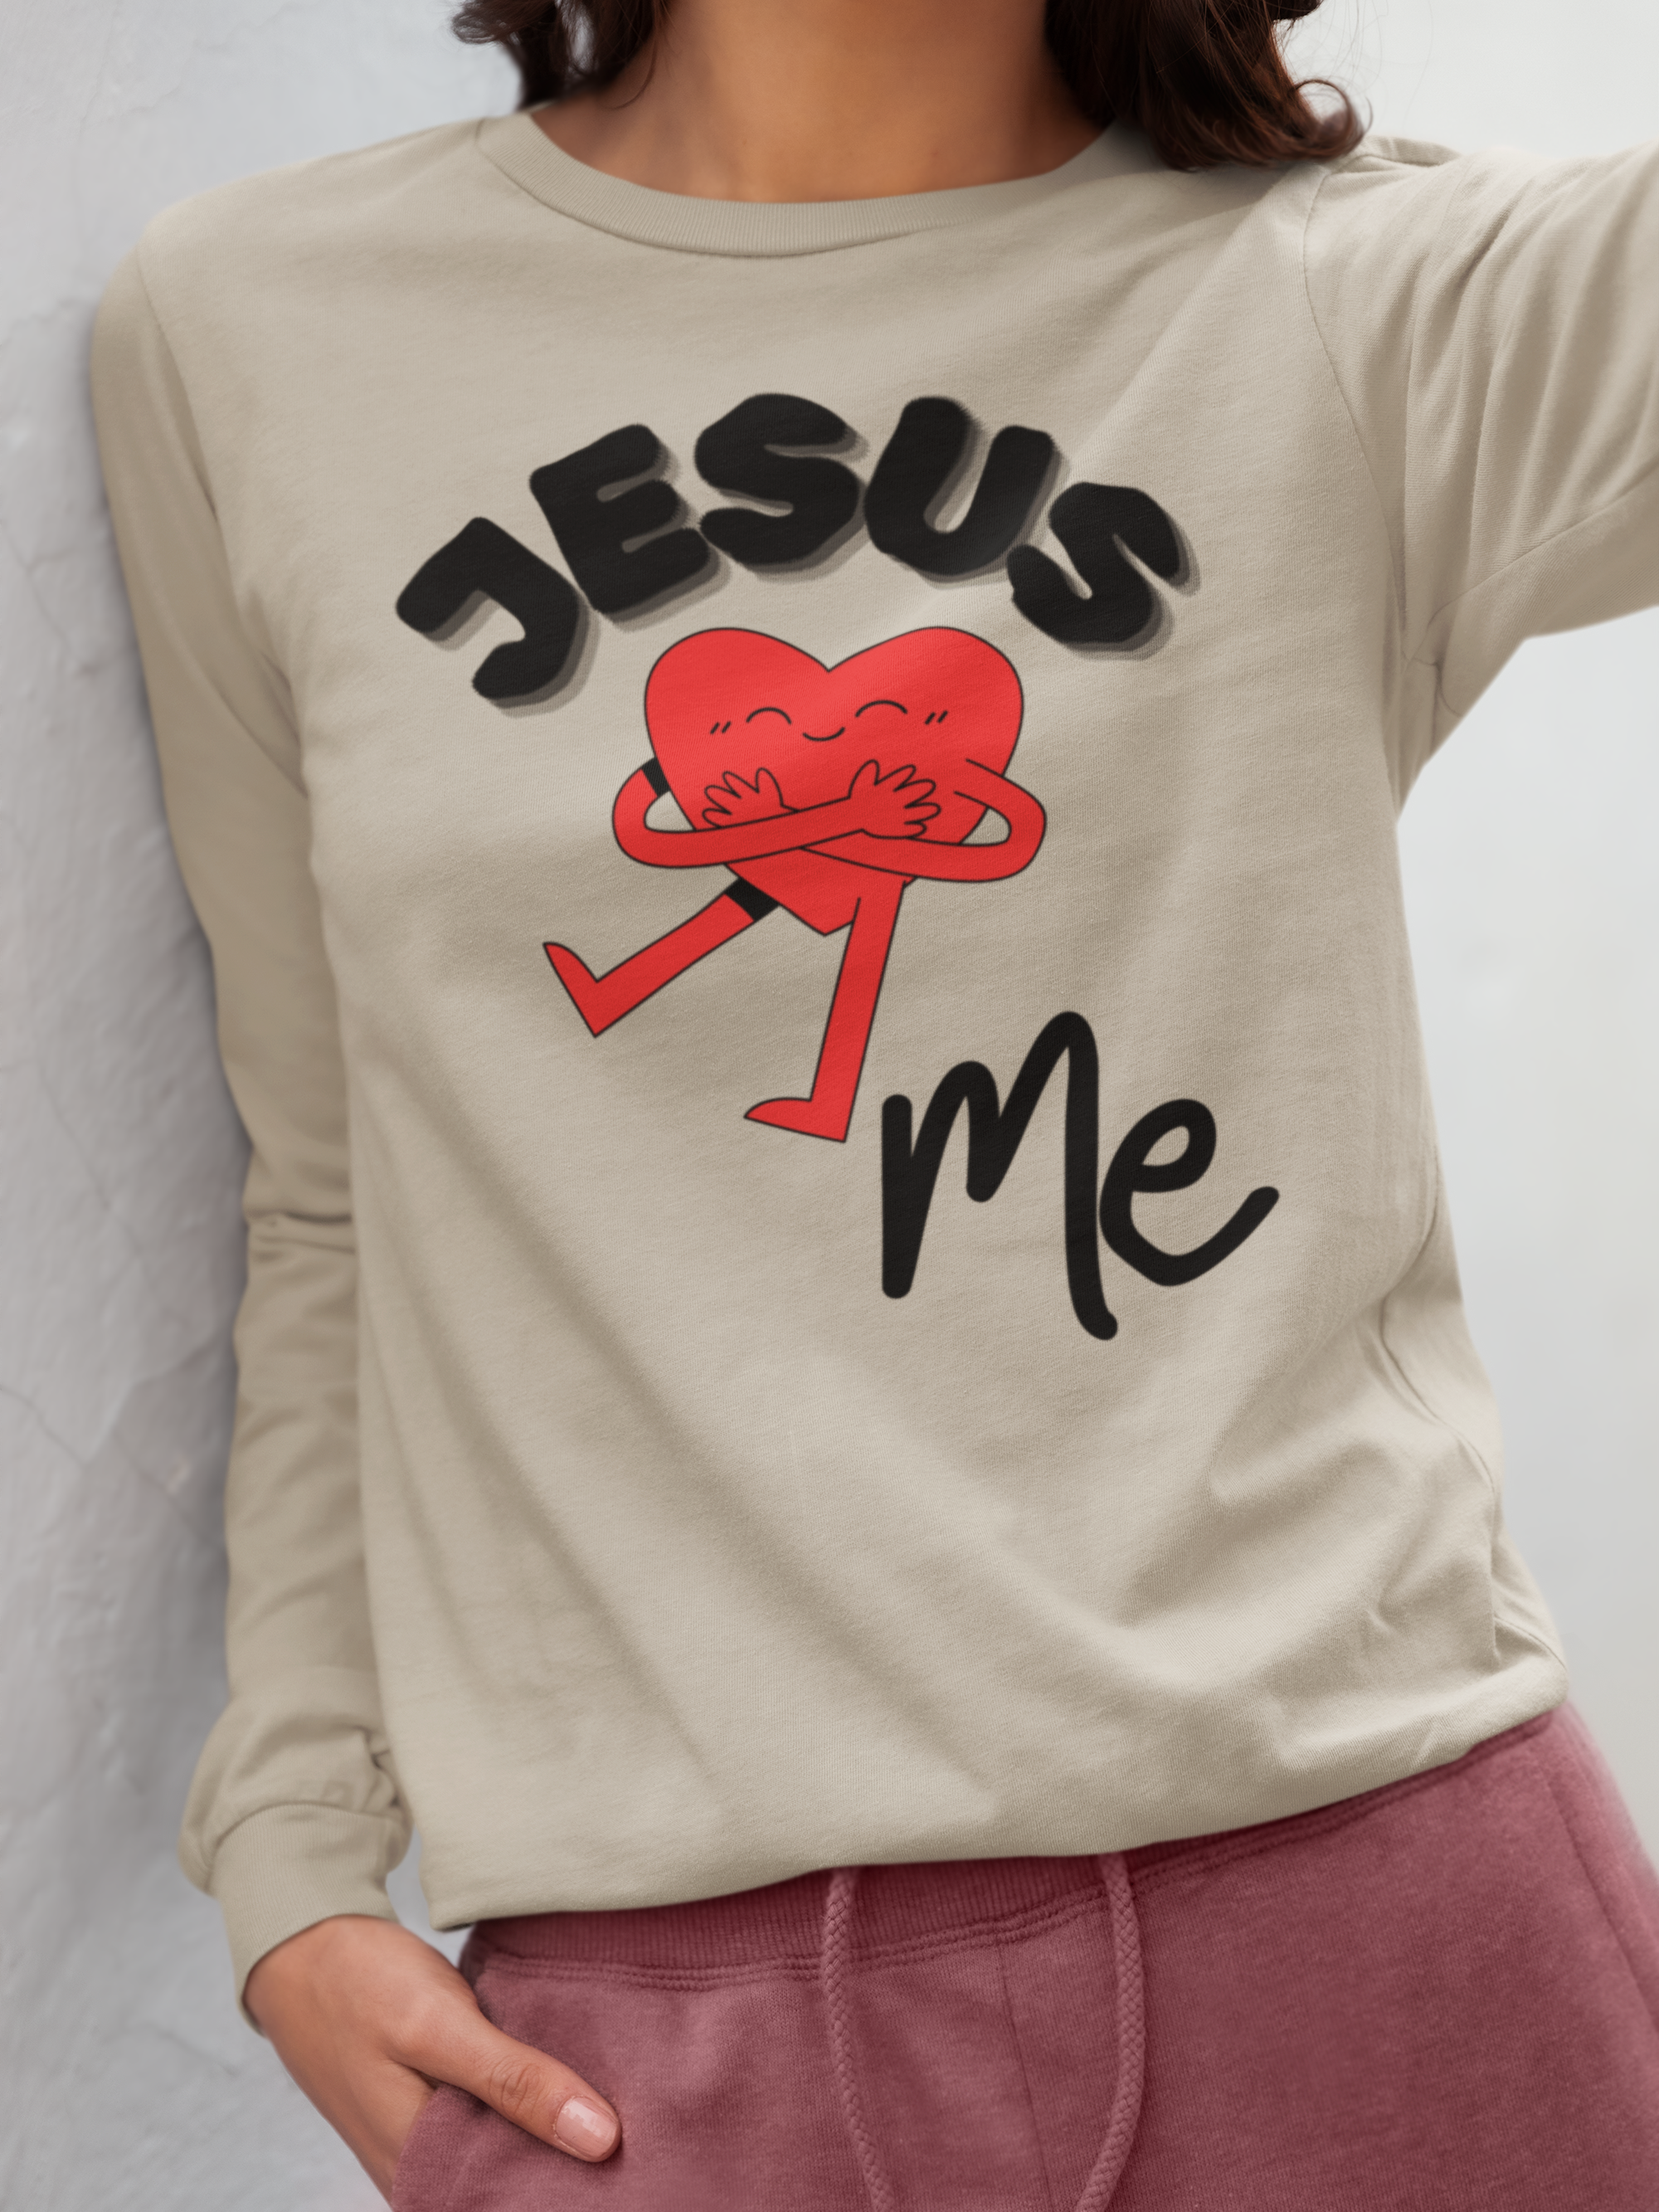 Jesus Loves Me Long Sleeve T-Shirt